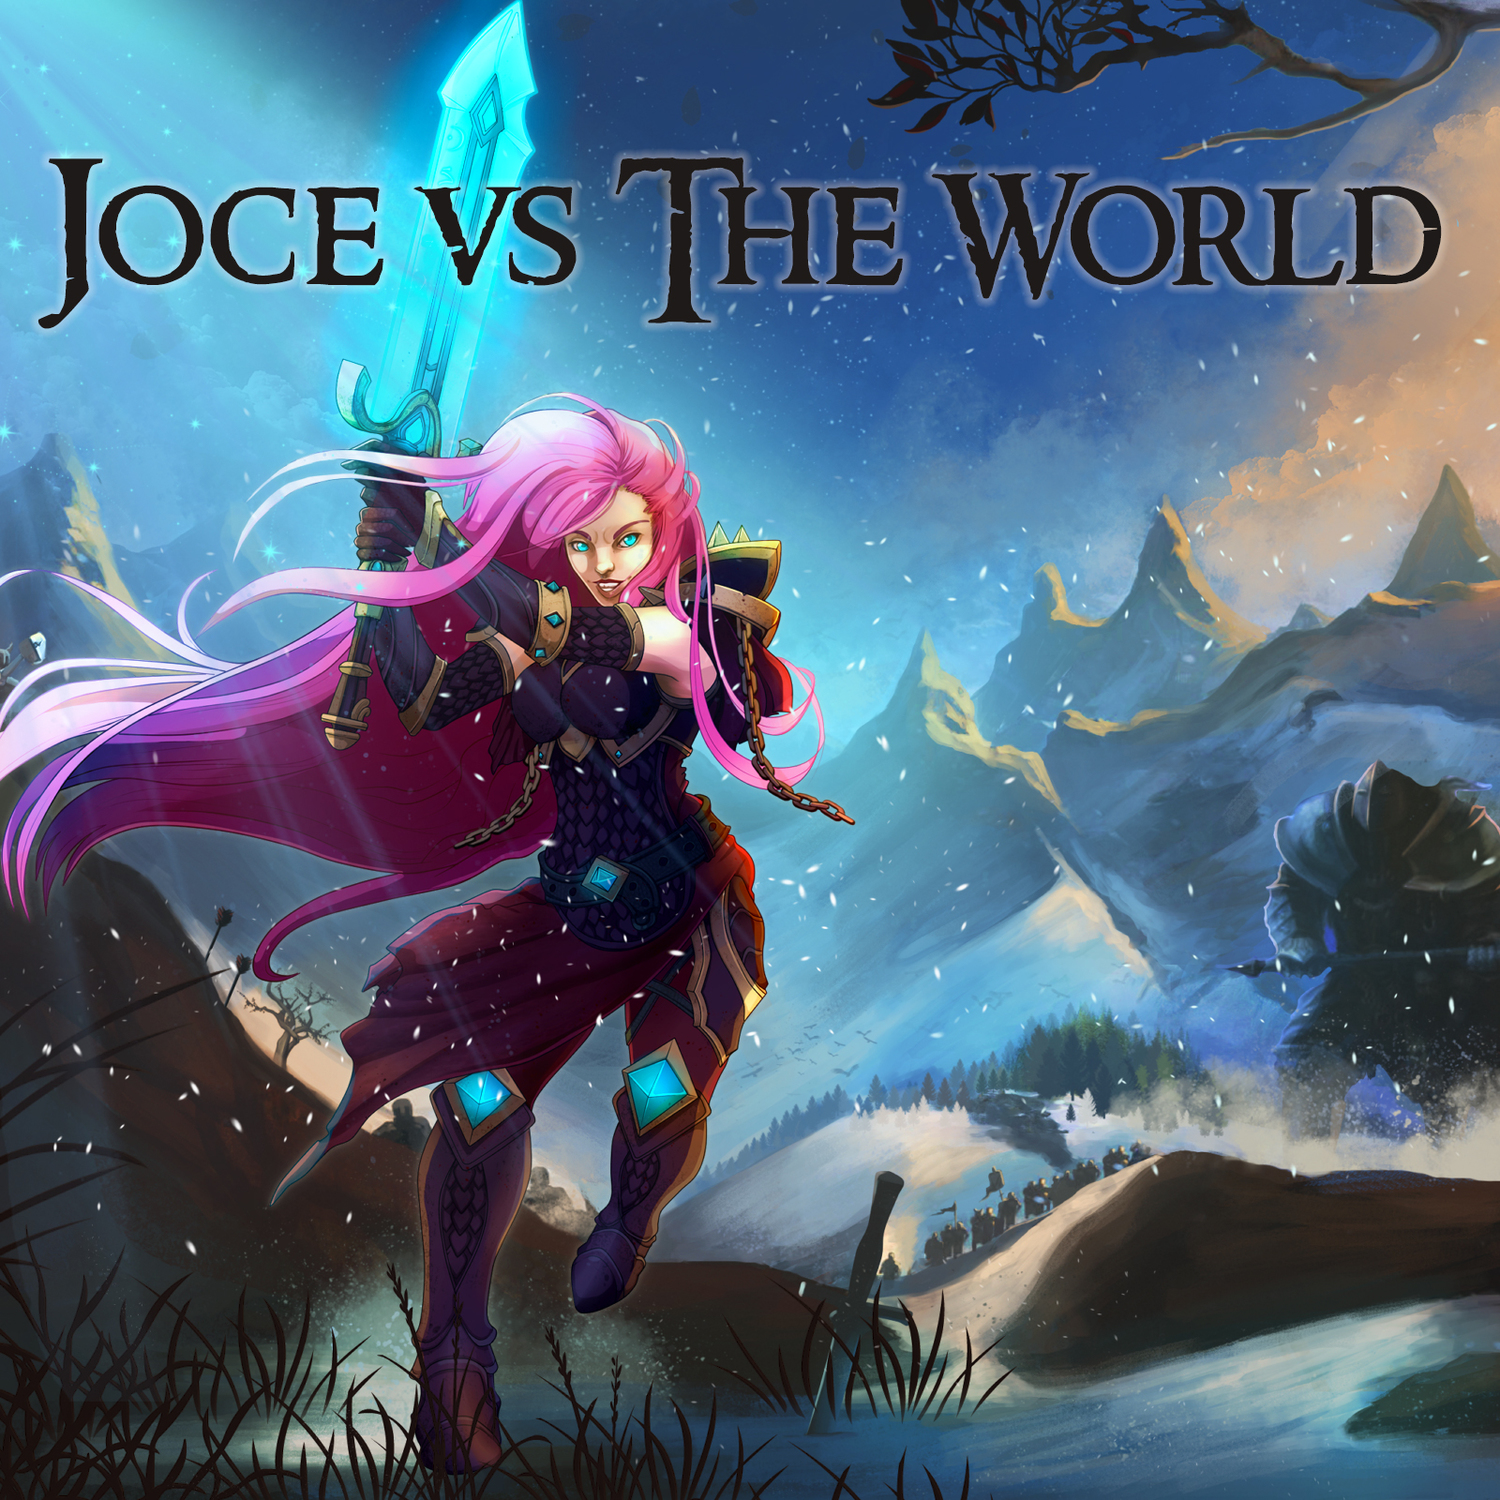 Joce vs The World